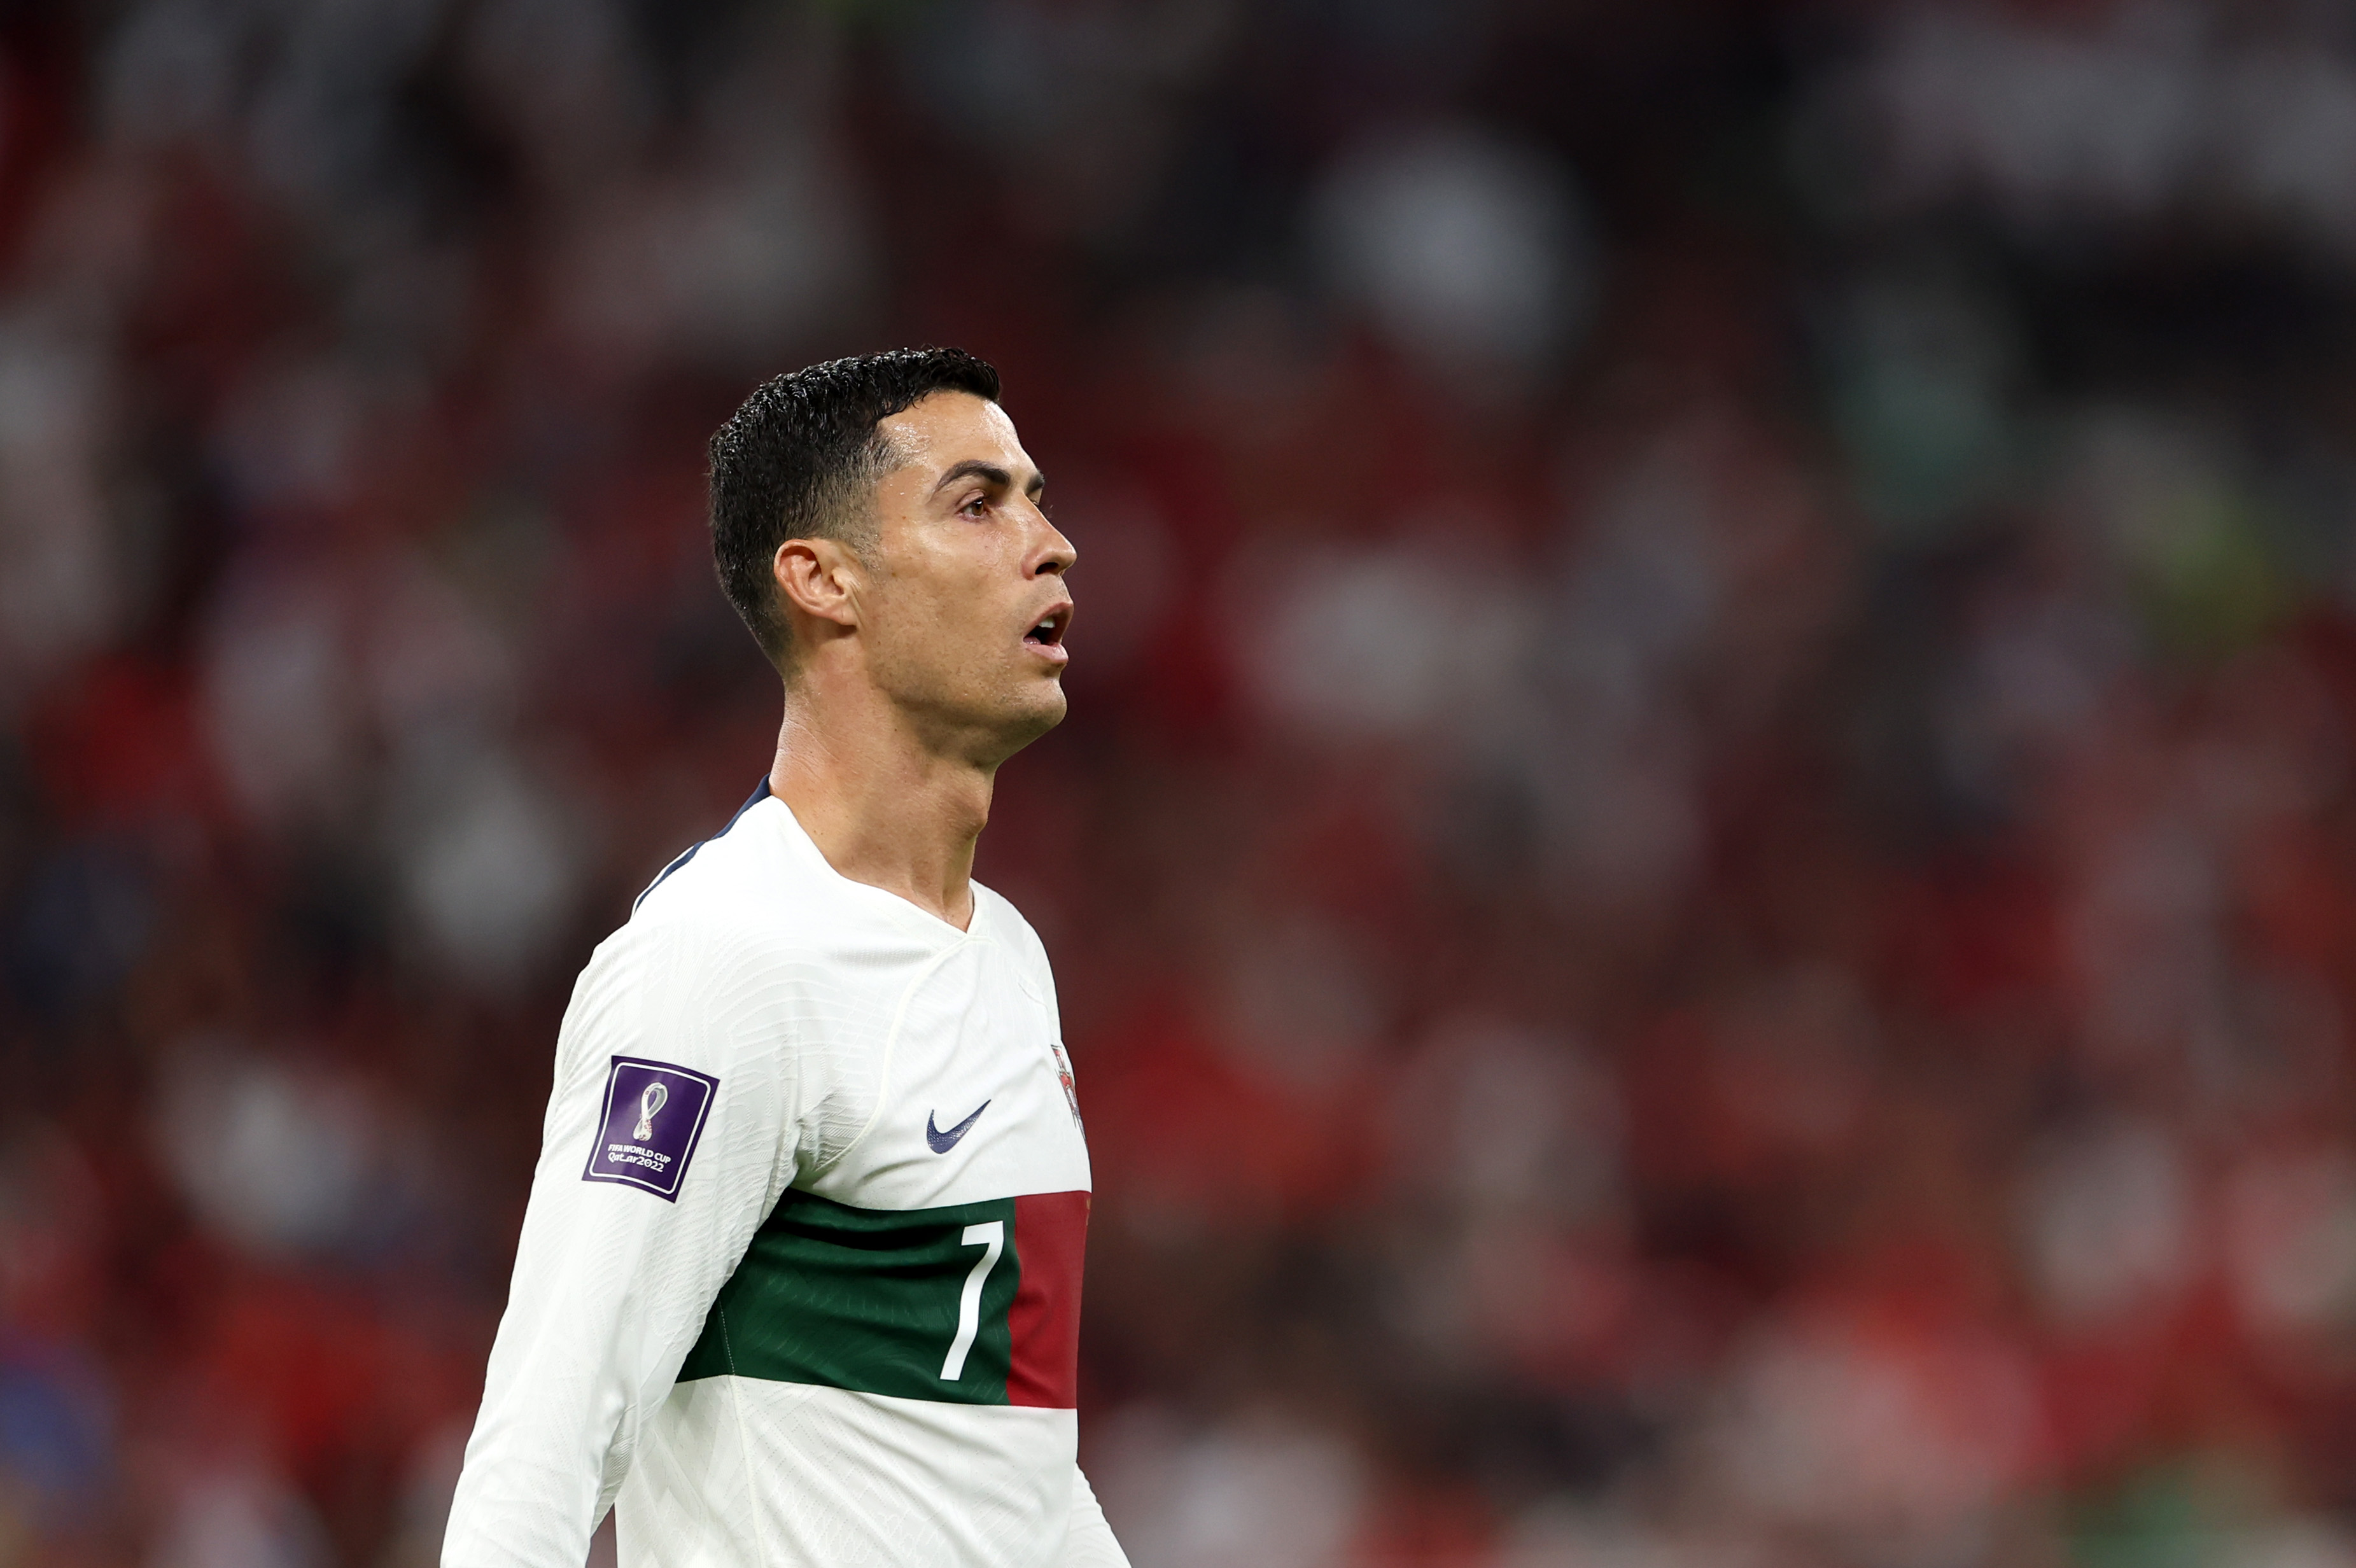 Cristiano Ronaldo equals the world record for caps